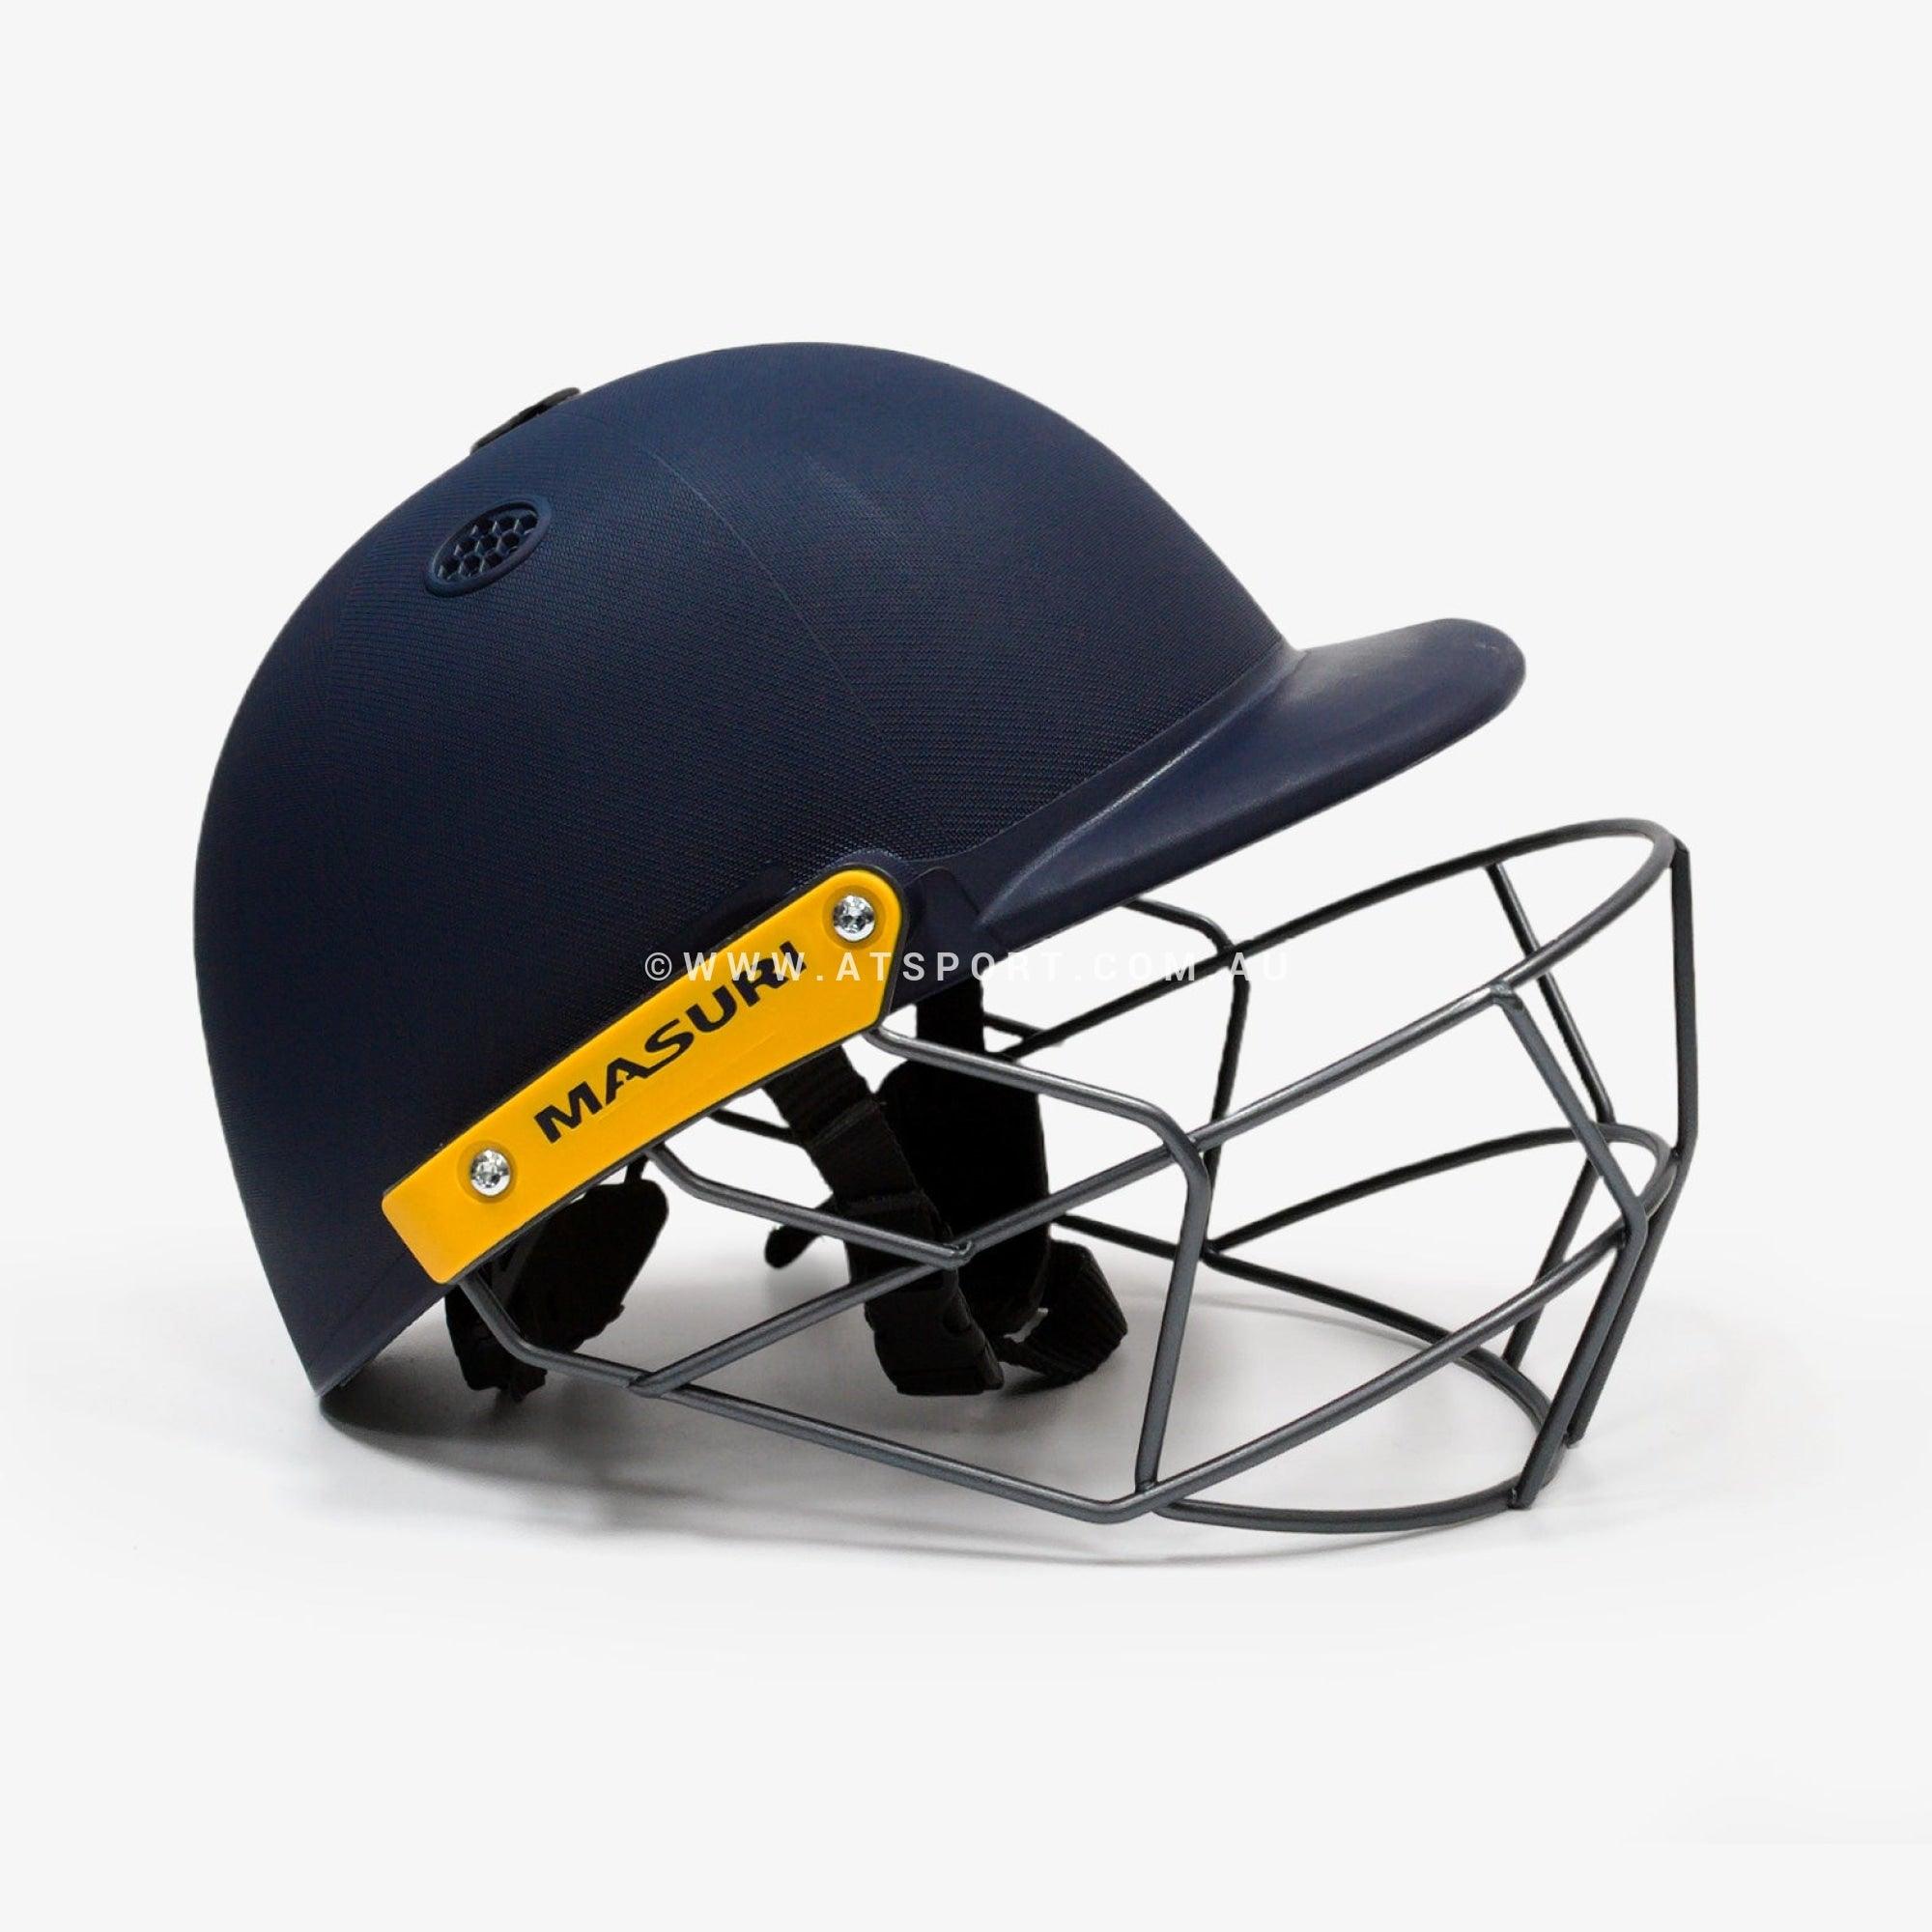 Masuri C LINE STEEL Grille Cricket Helmet - JUNIOR - AT Sports